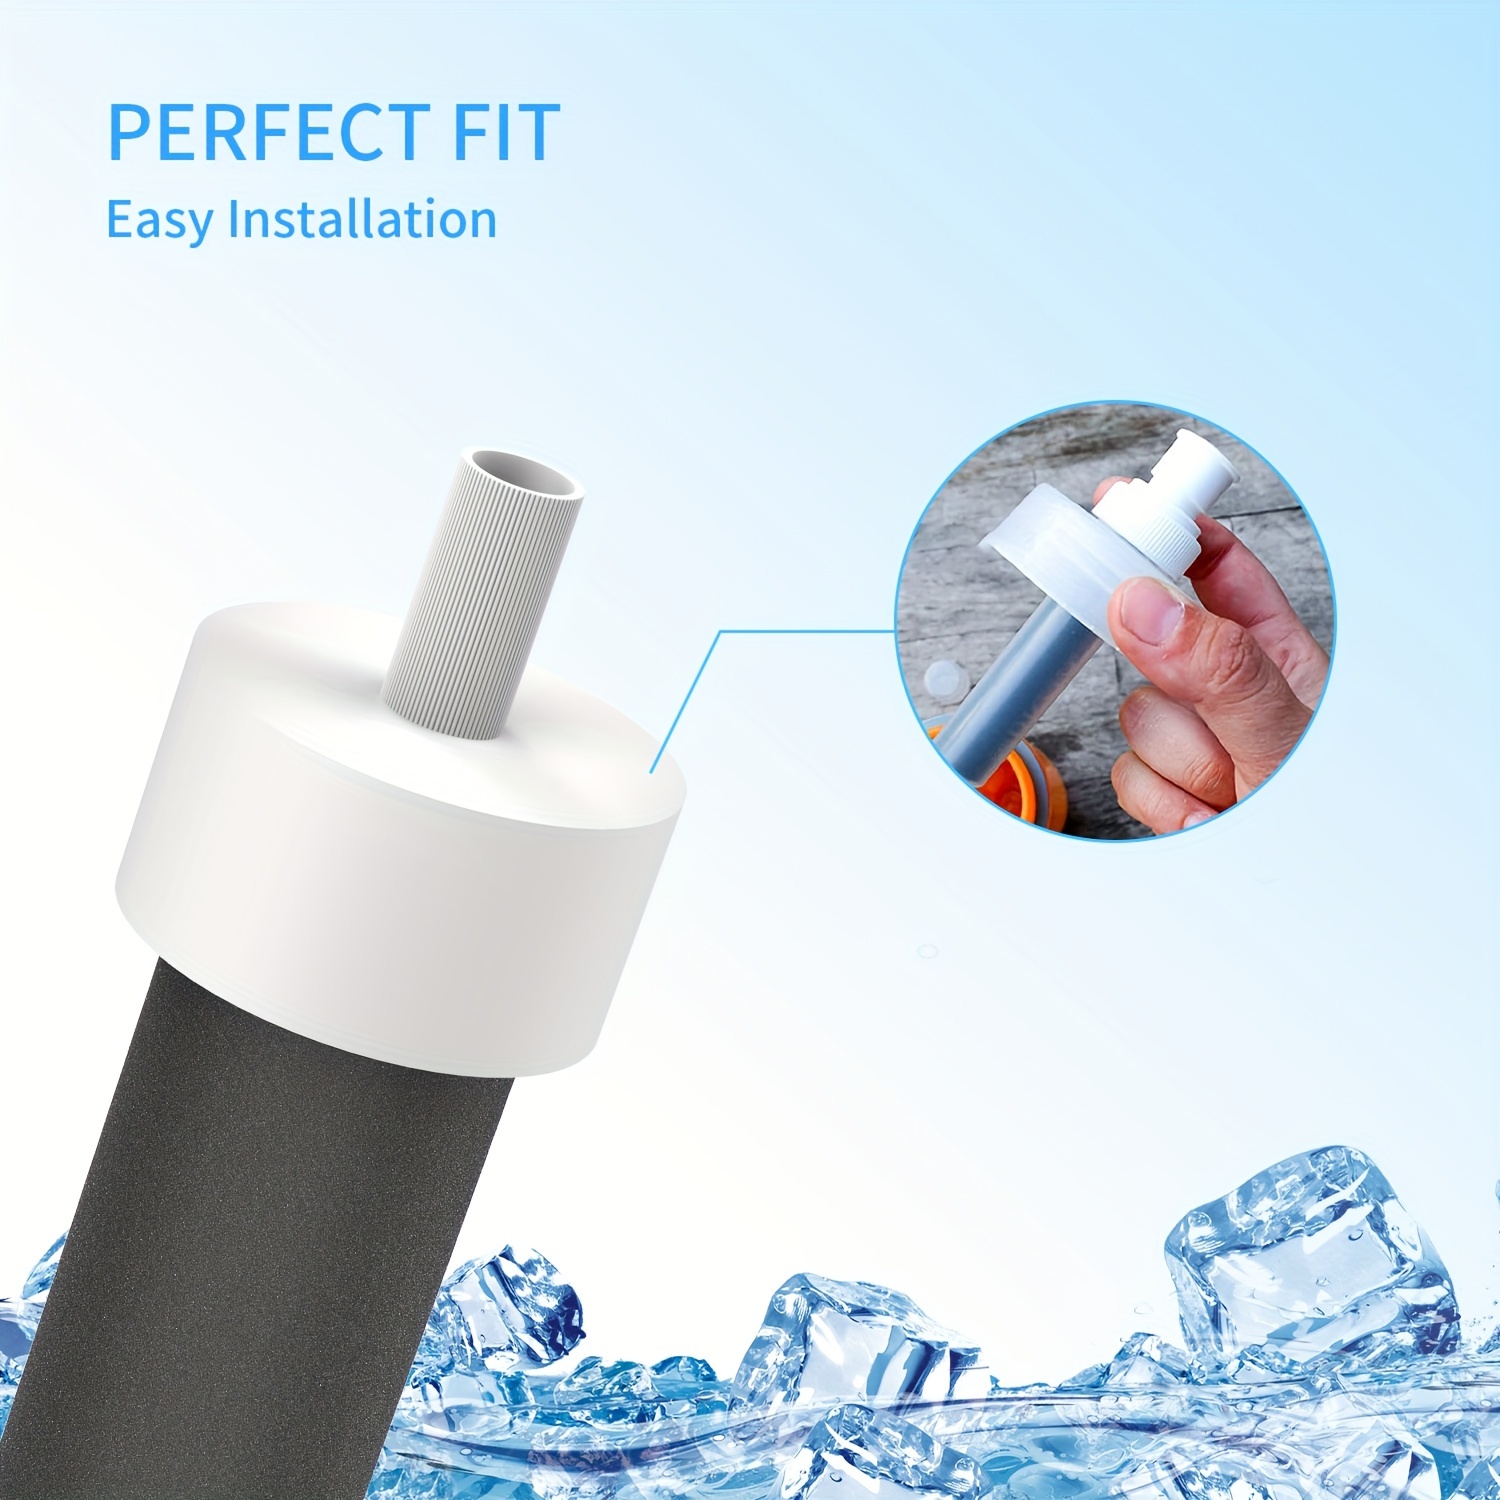 Filter Brita Maxtra + Hard Water Expert 3 Units White